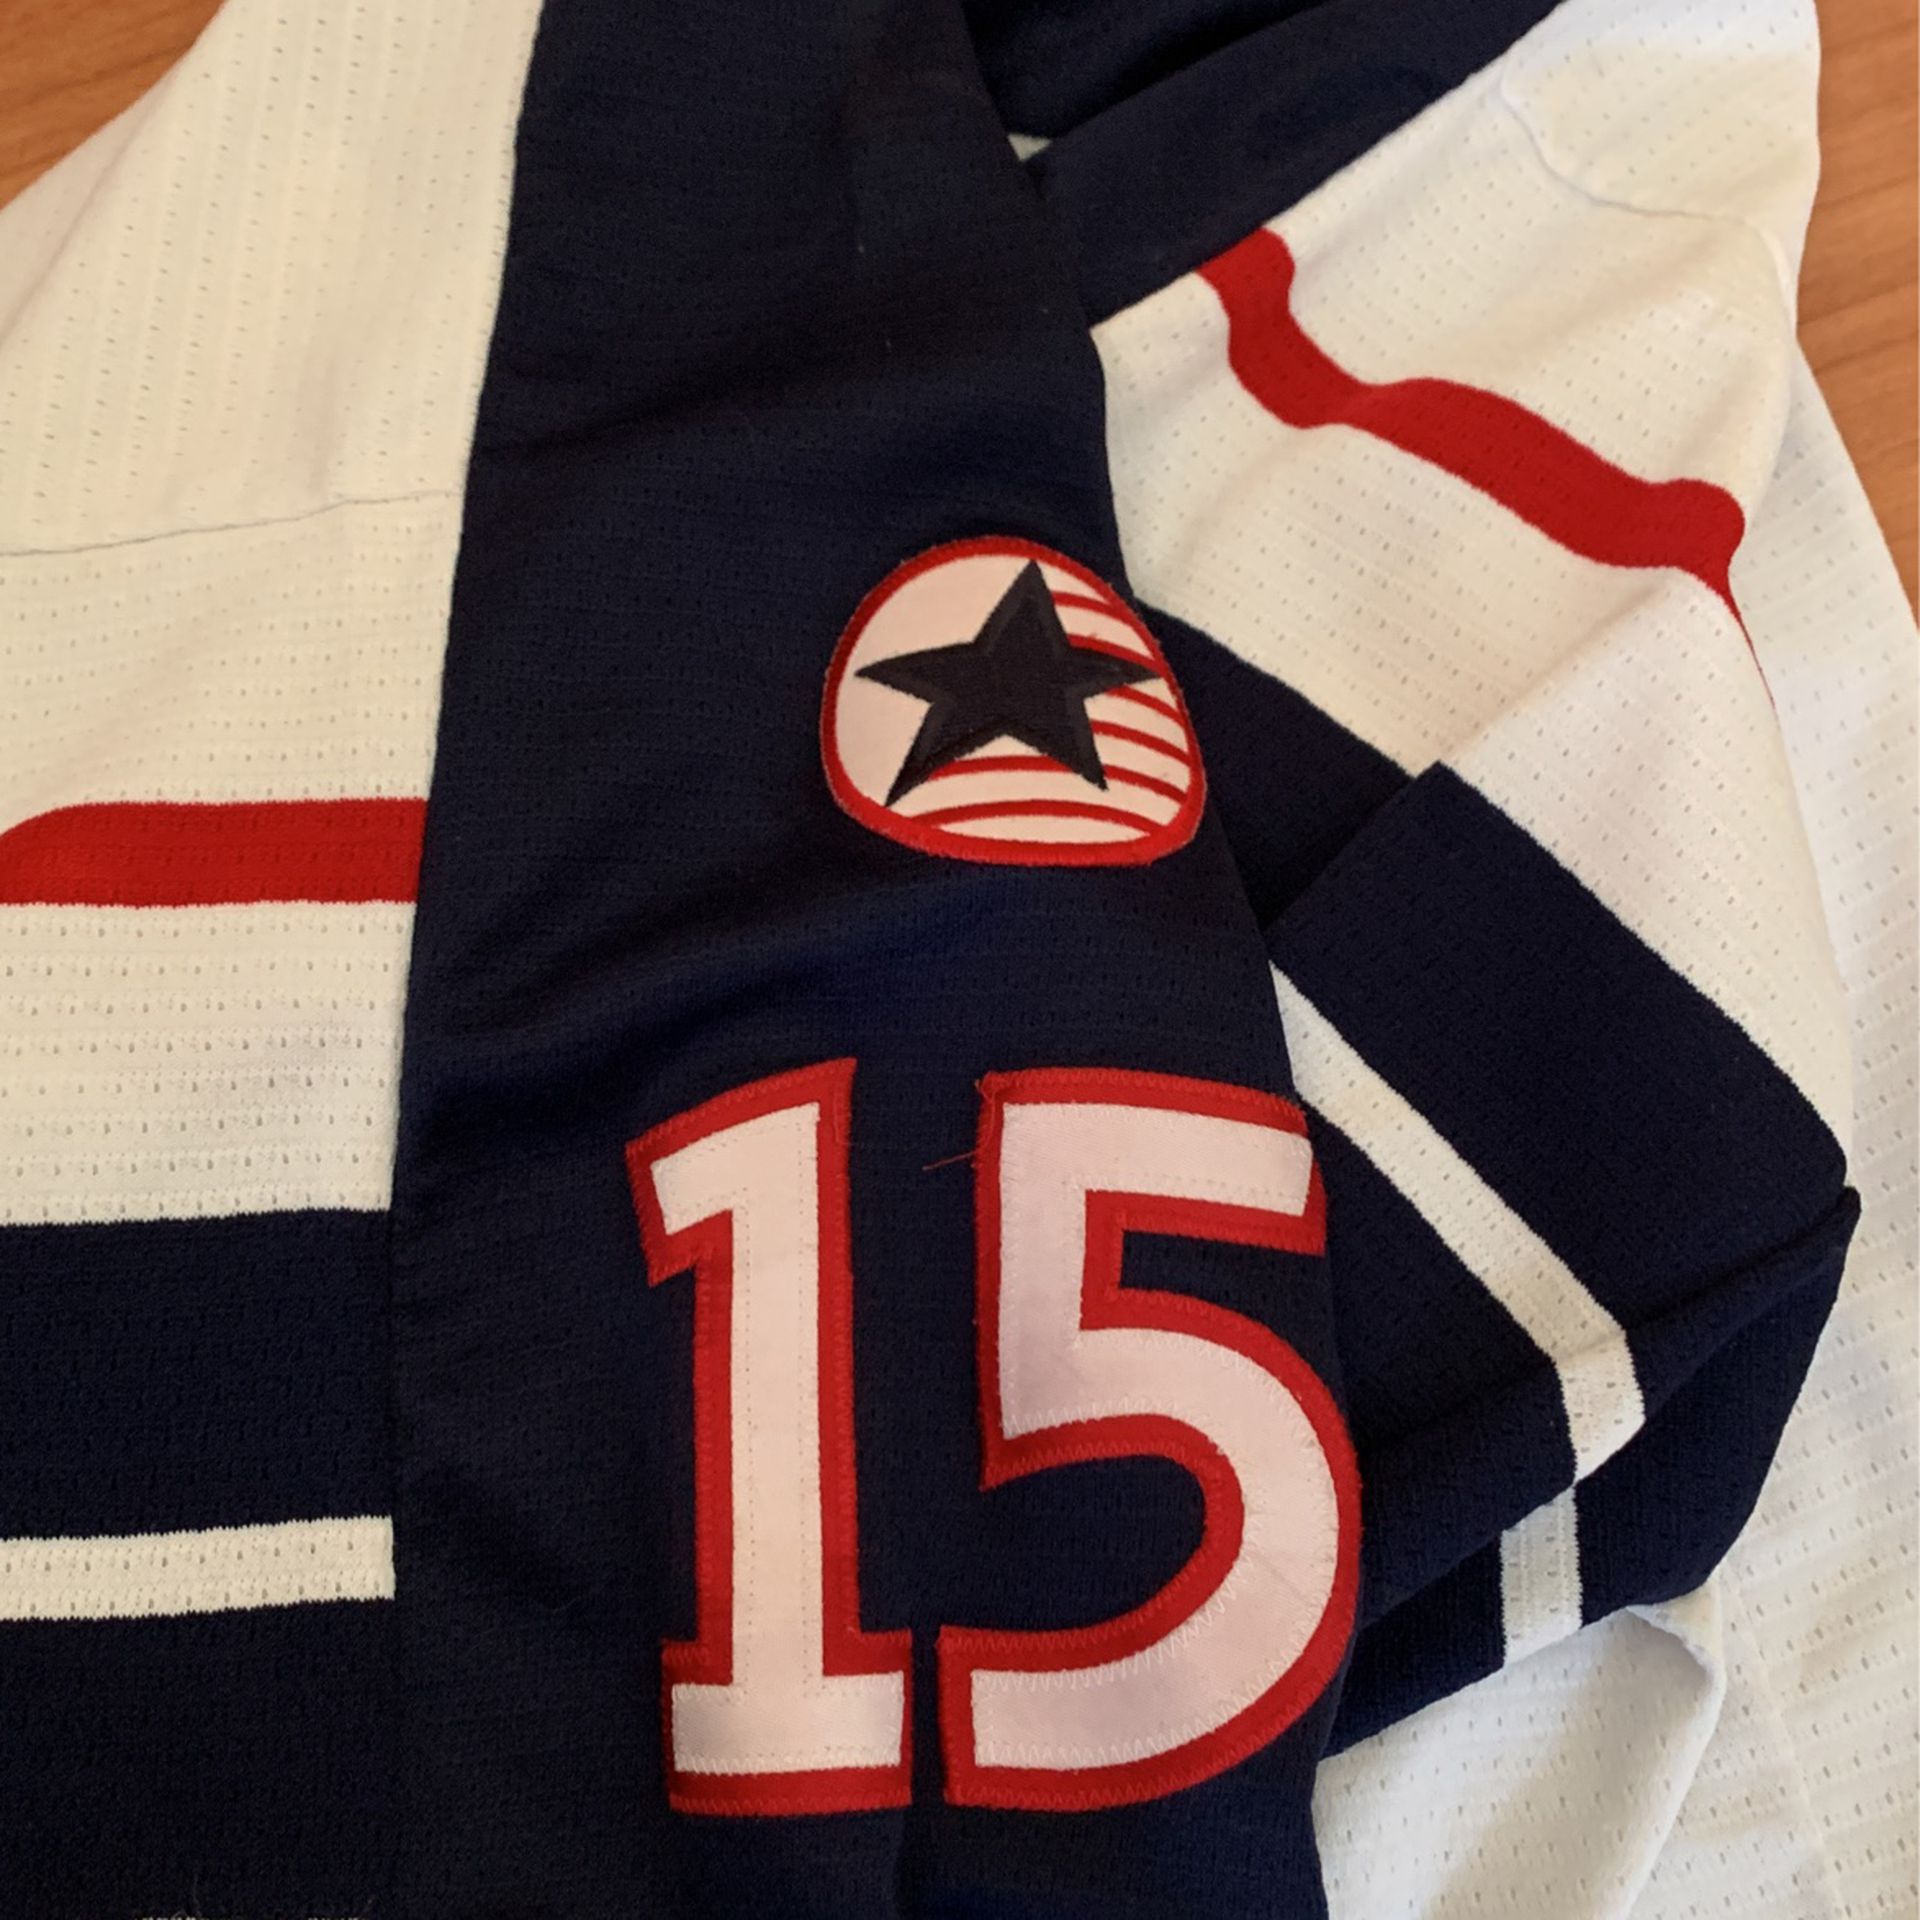 1998 Team USA Hockey Jersey Brett Hull size 56 for Sale in Islip